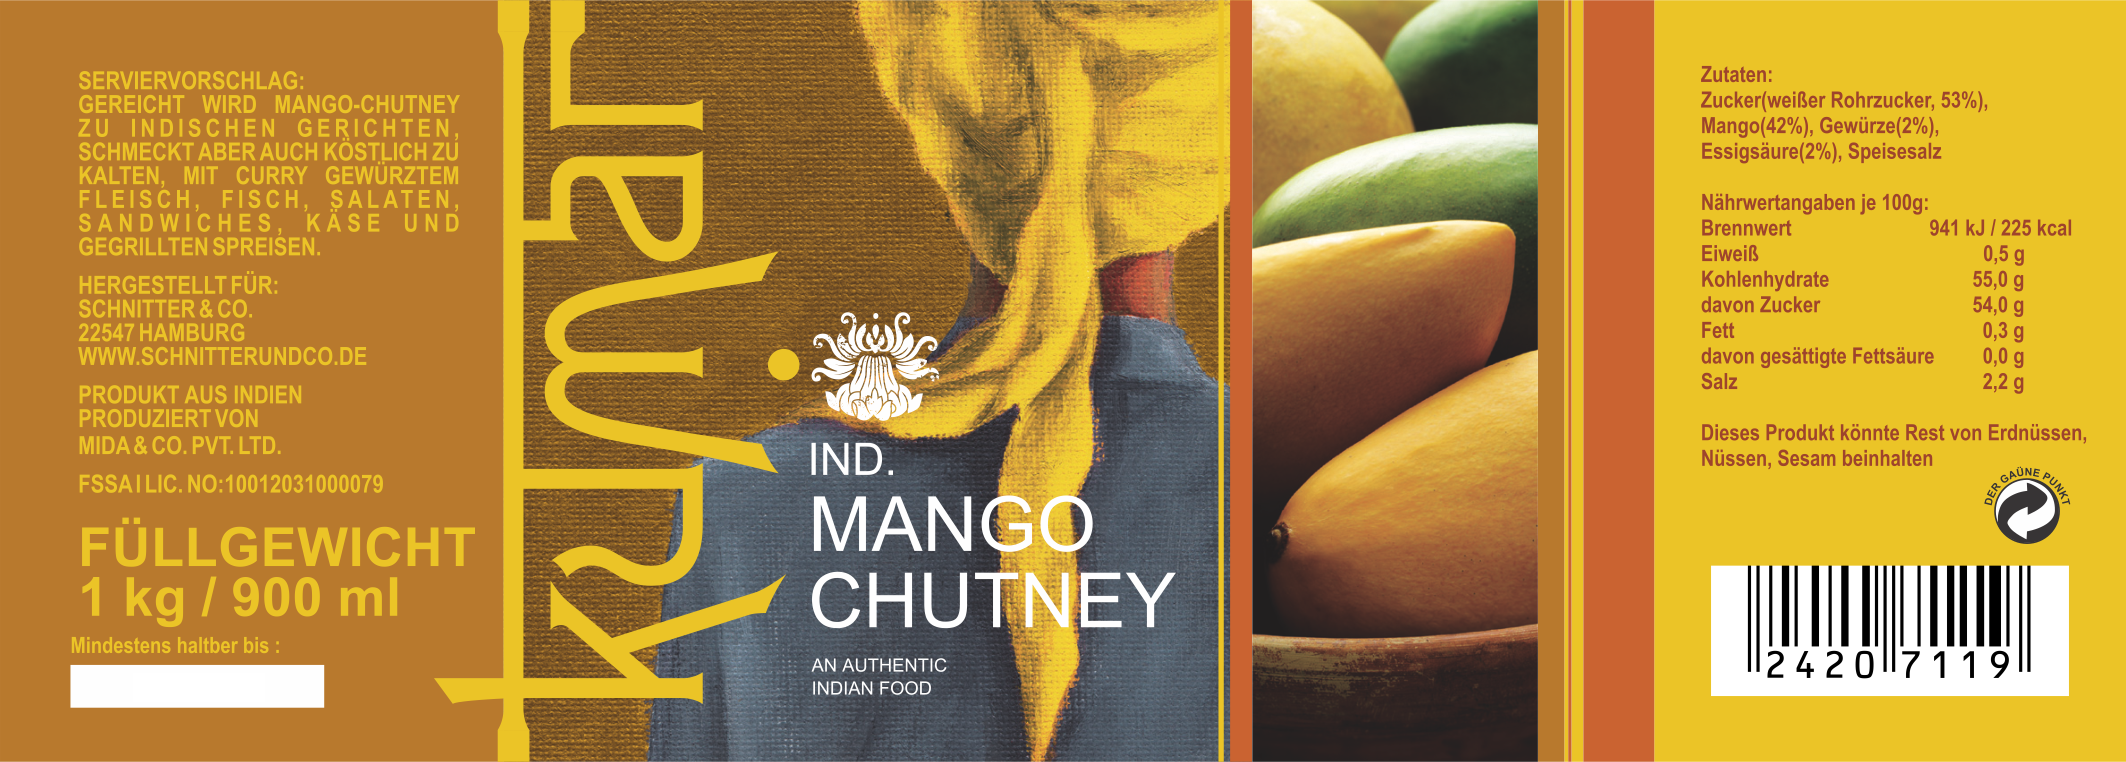 Kumar Mango Chutney Label (1 Kg)